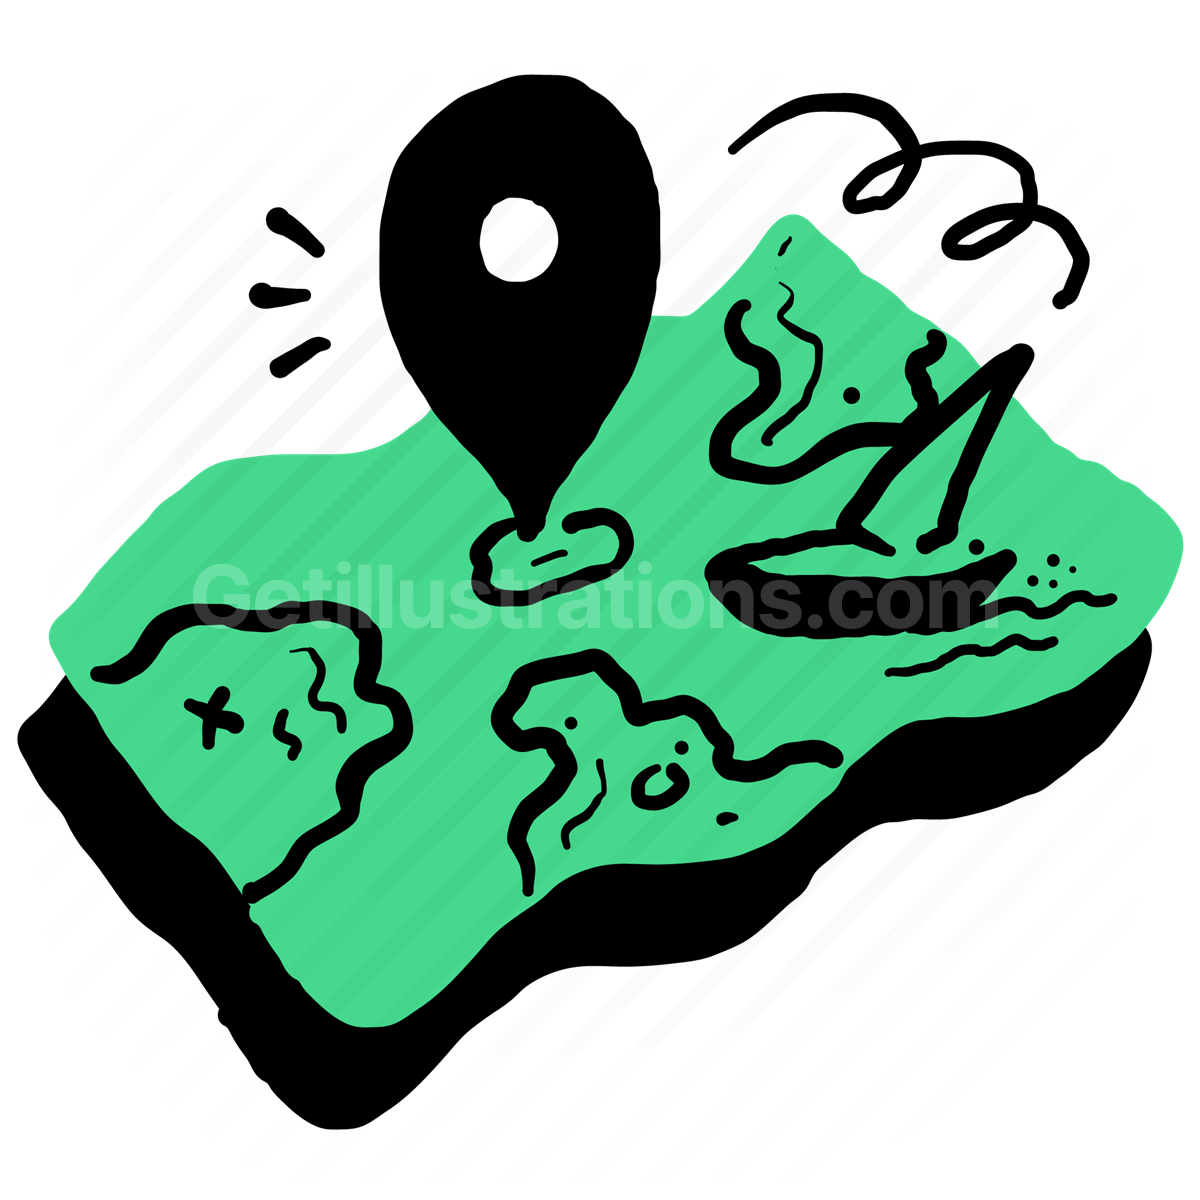 Navigation and Location illustration